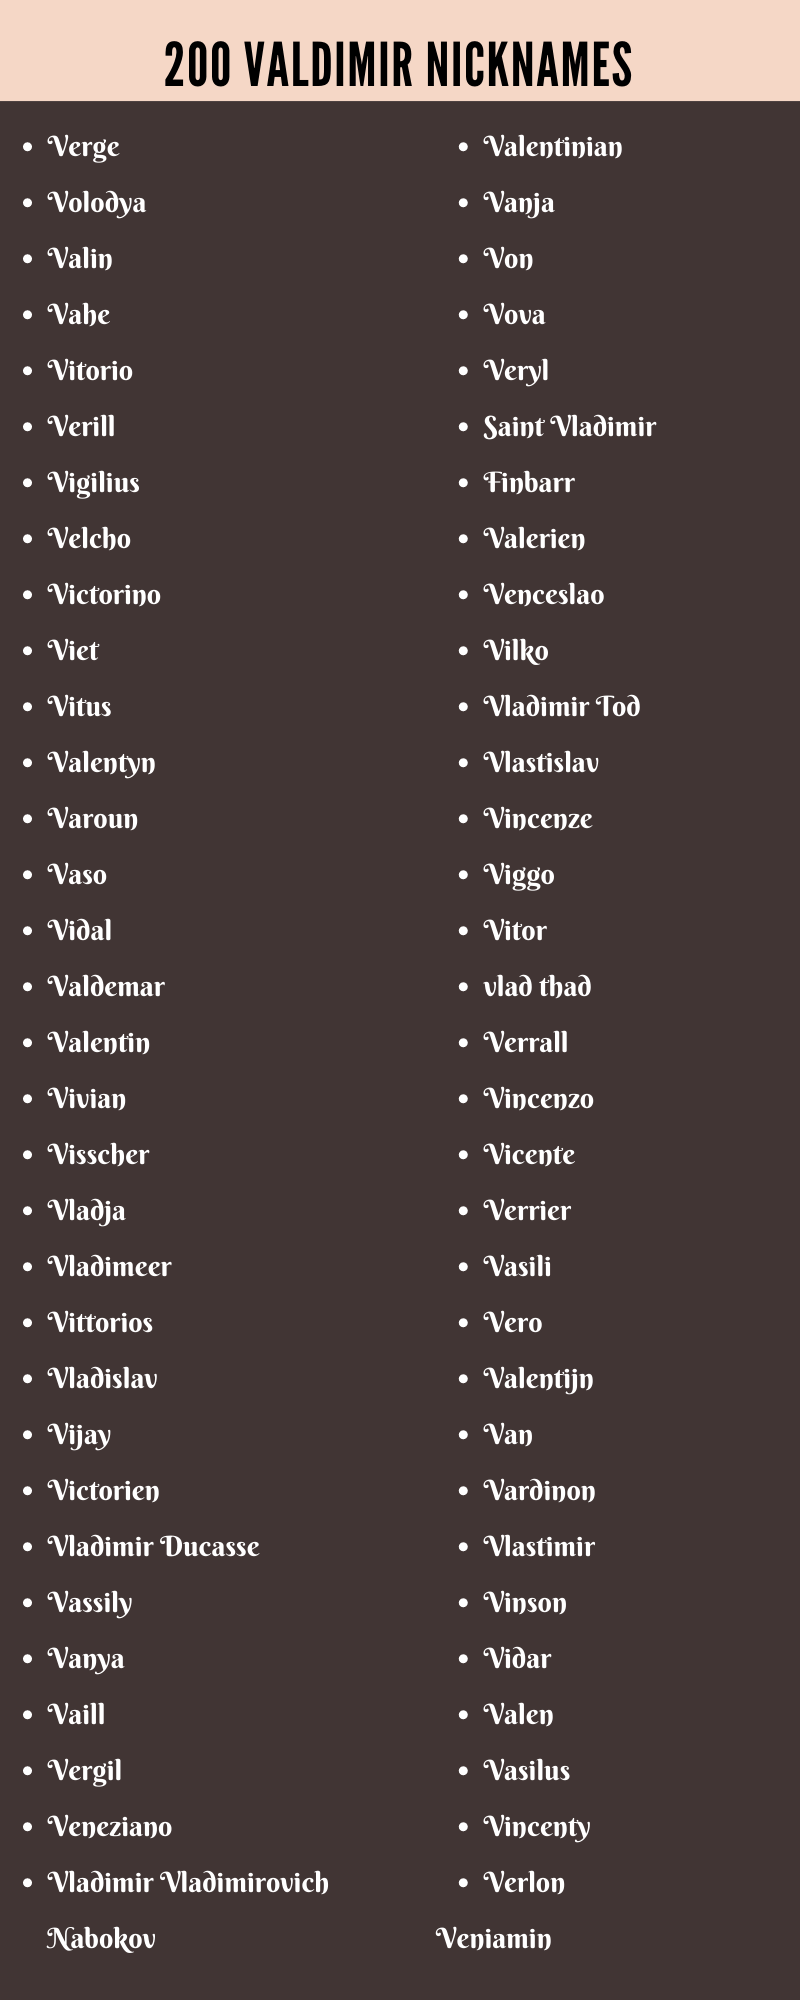 valdimir nicknames